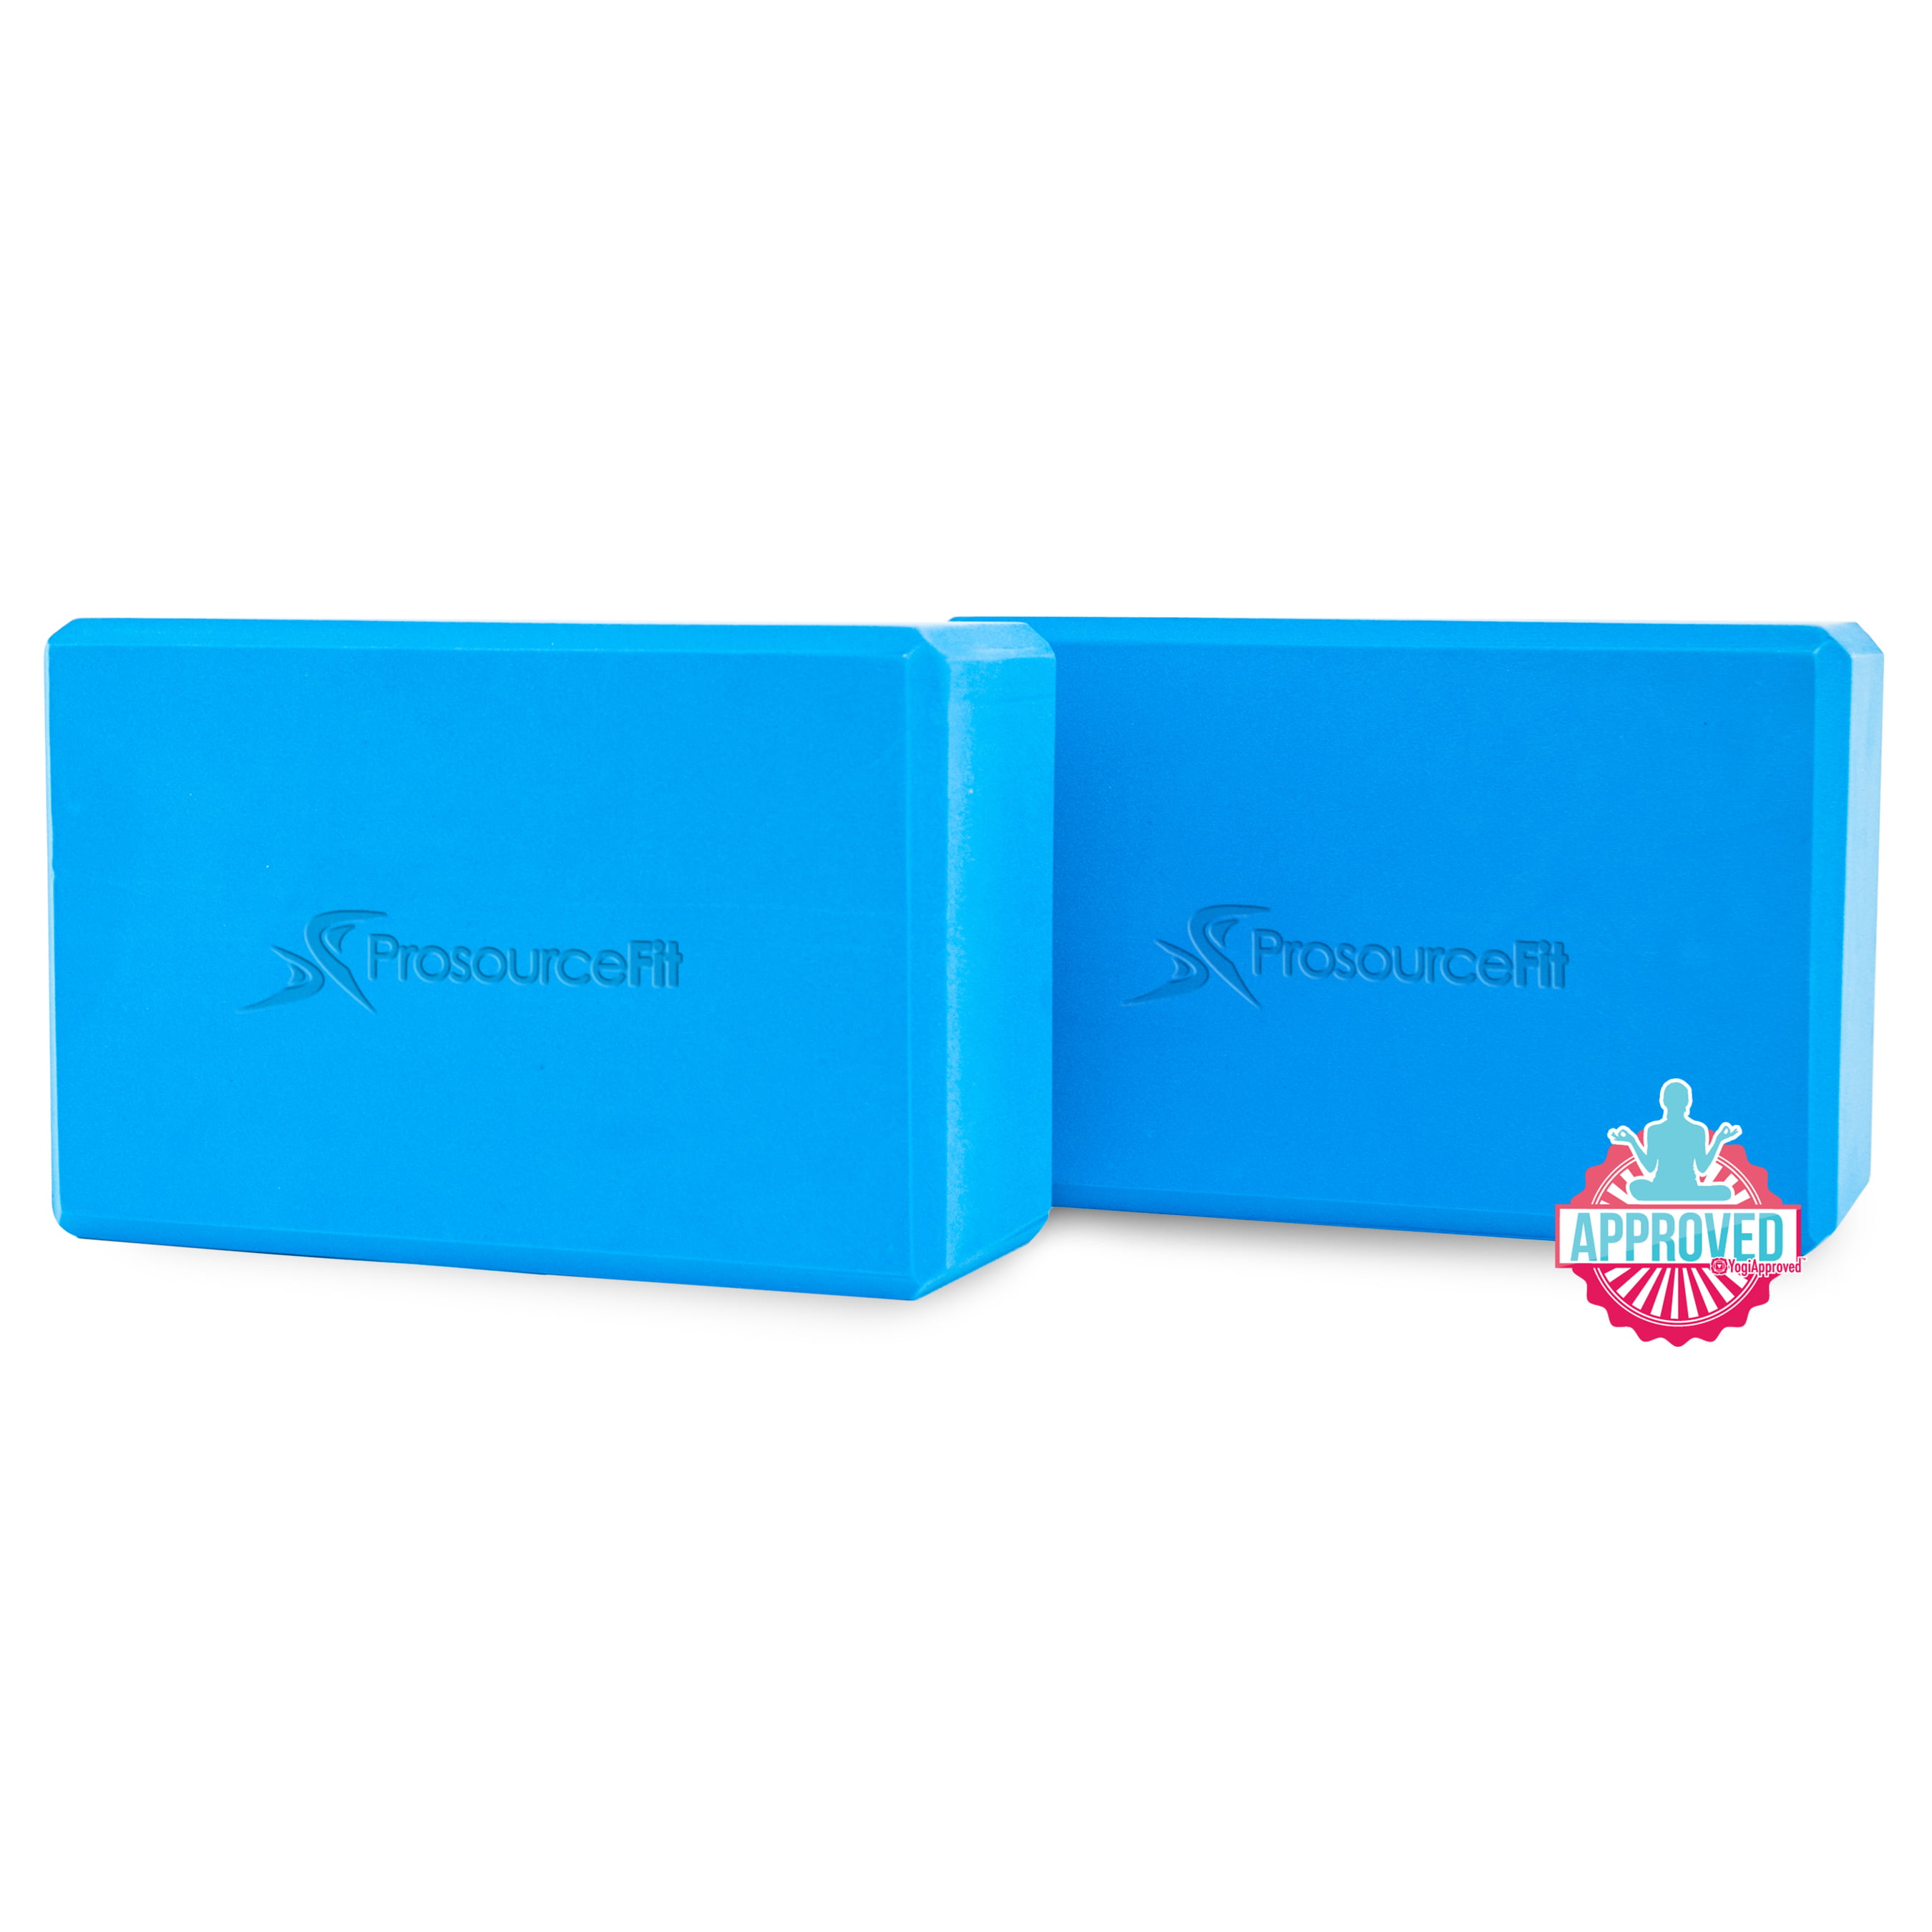 Sturdy Yoga Prop Large Size 4”x 6” x 9” High Density EVA Yoga Bricks Prosource Fit Foam Yoga Blocks Set of 2 